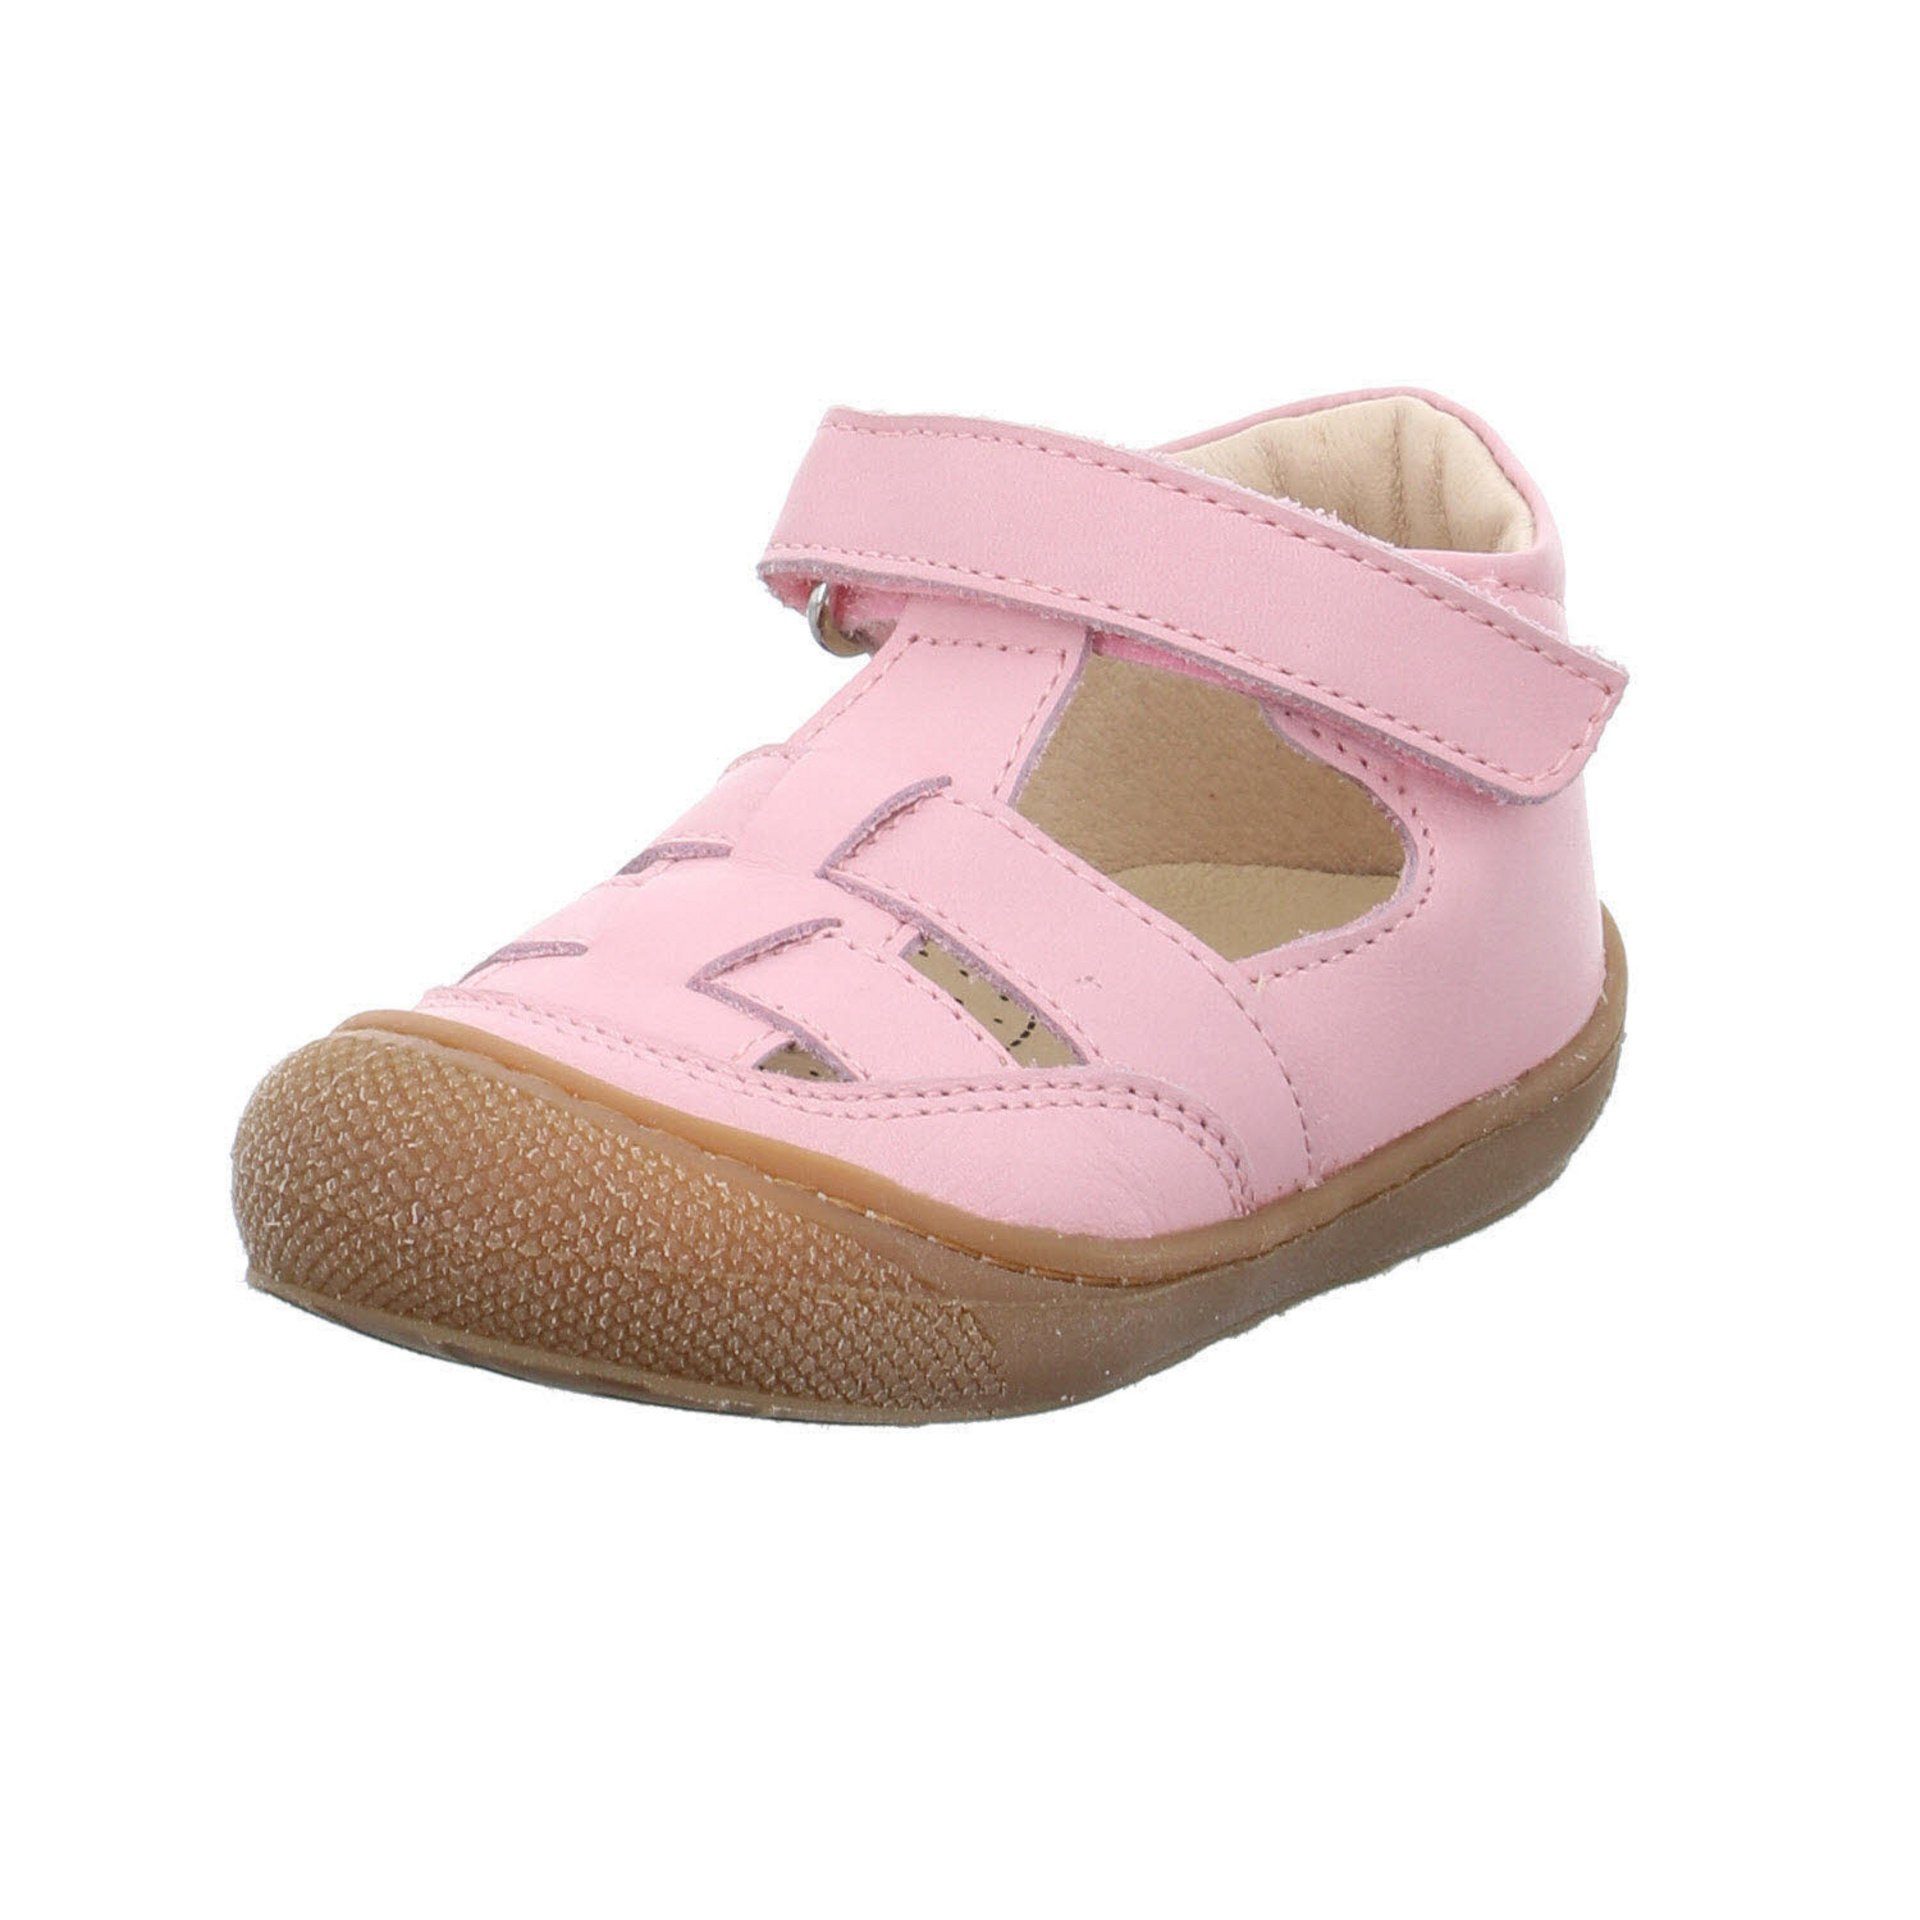 Naturino Mädchen Sandalen Schuhe Wad Minilette Kinderschuhe Sandale Glattleder rot + lila hell